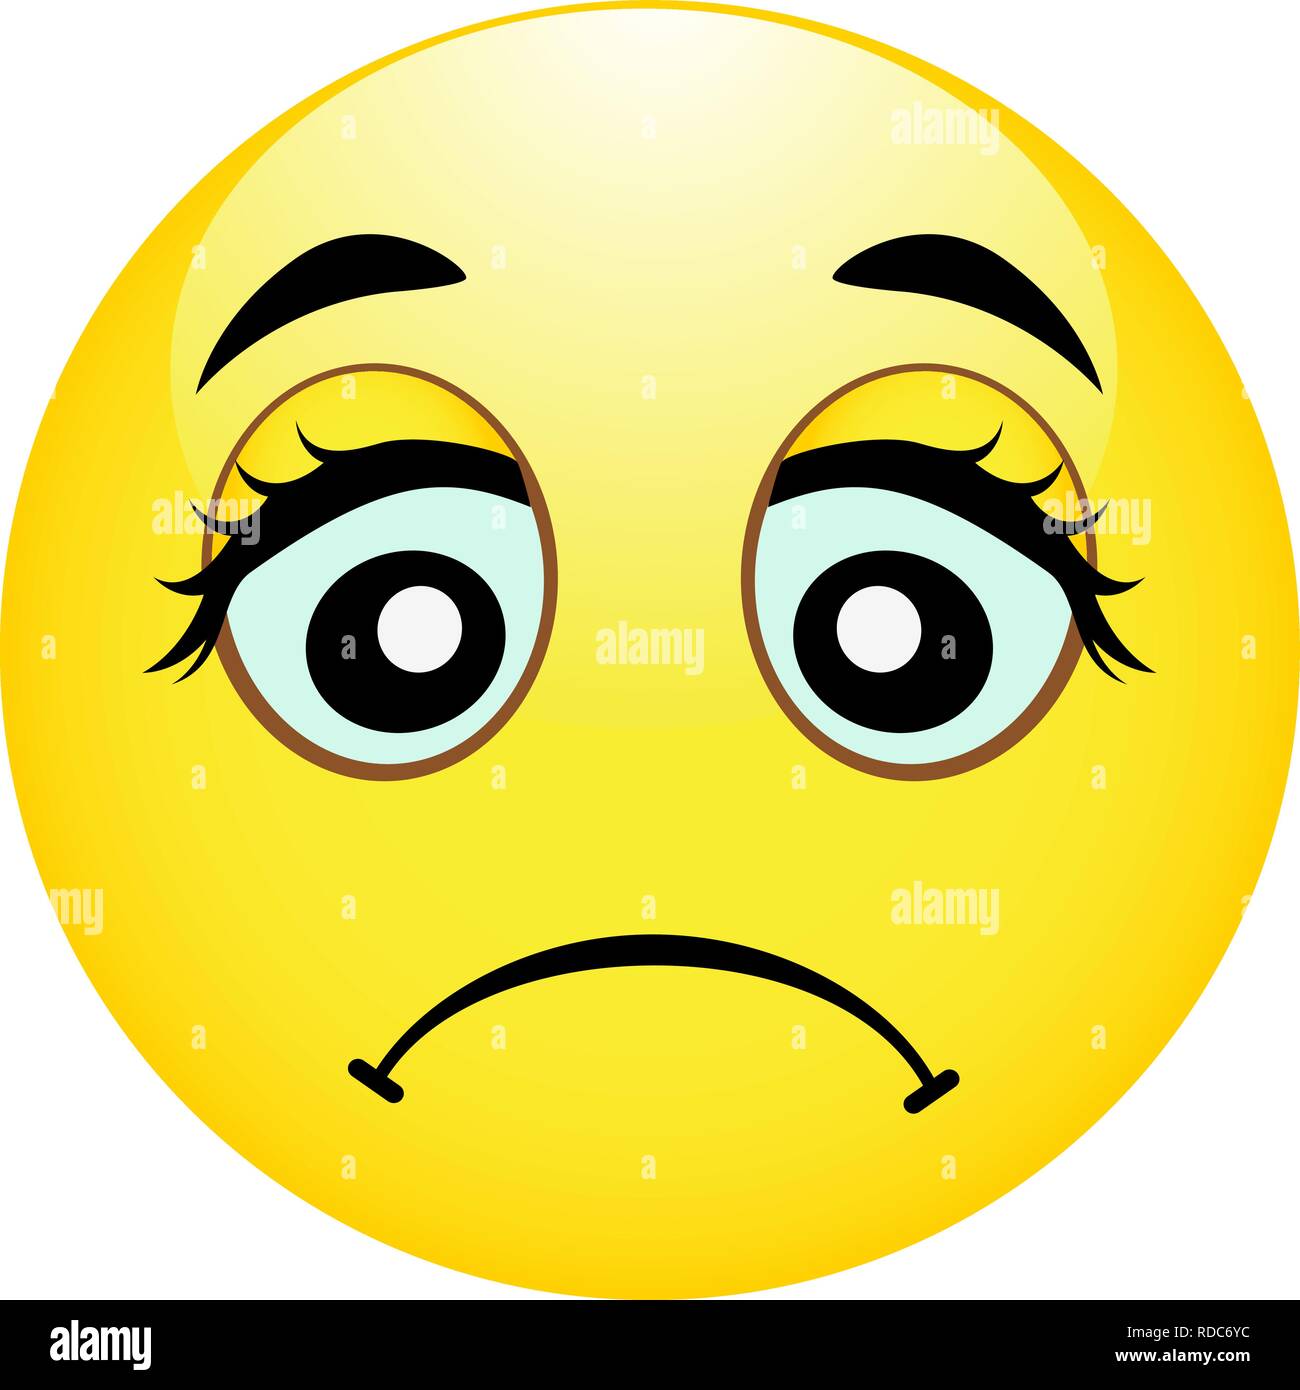 [Get 25+] Imagen De Emoji Triste Con Frases